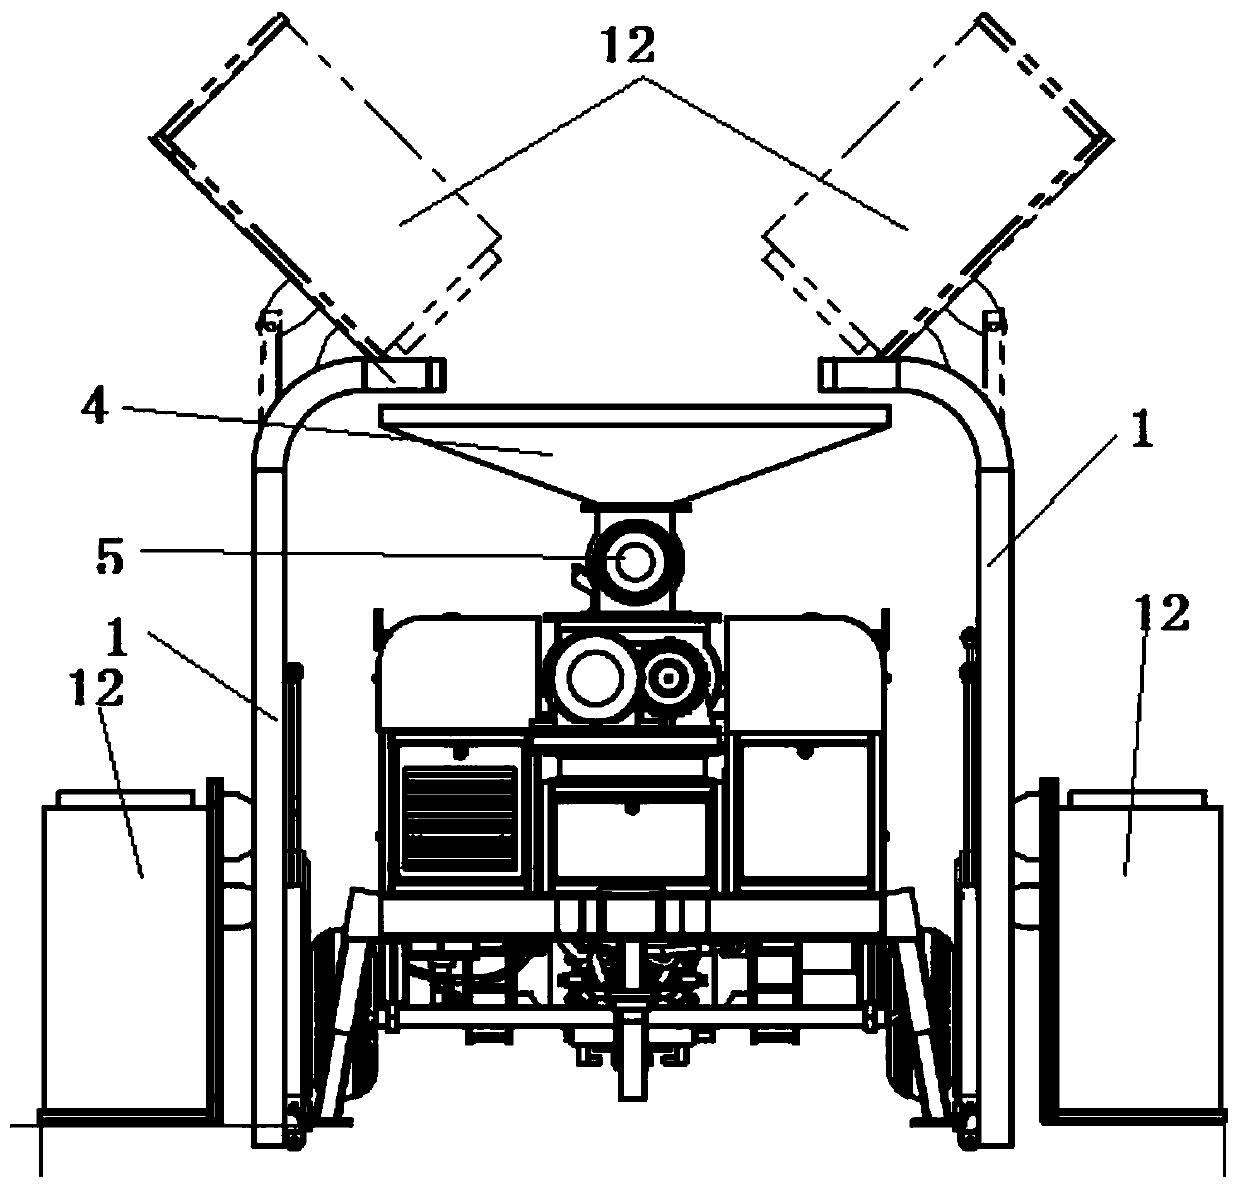 Integrated slurrying equipment